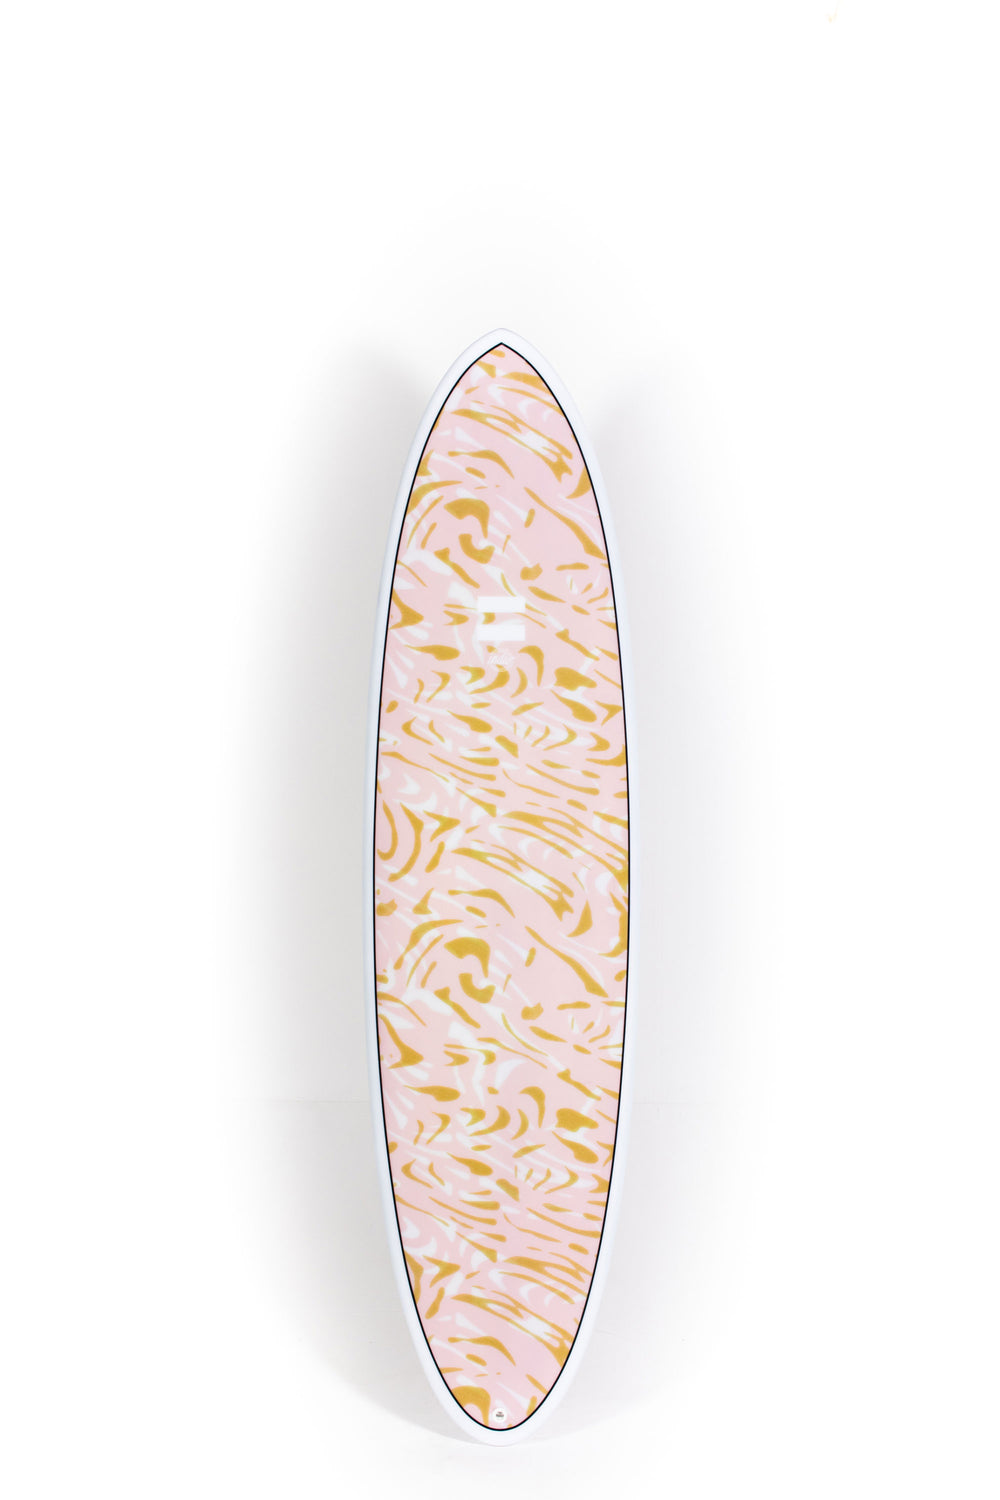 Indio Surfboards - THE EGG Sabana - 7'2